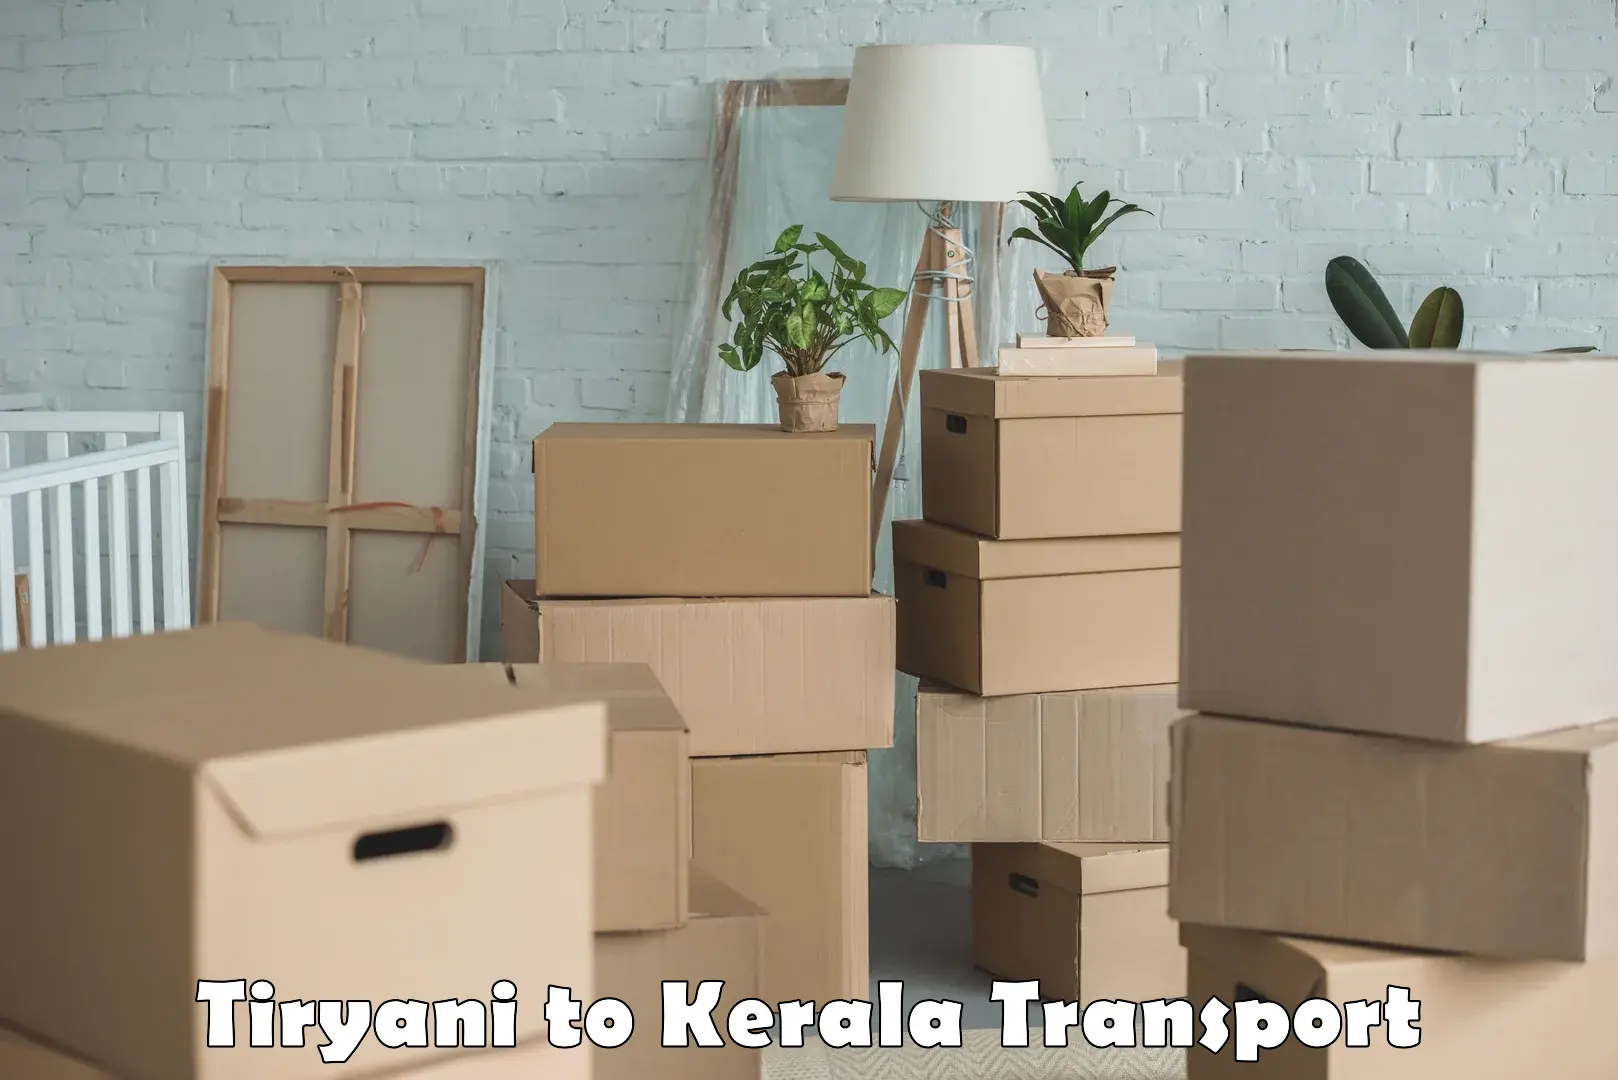 Online transport service Tiryani to Kochi